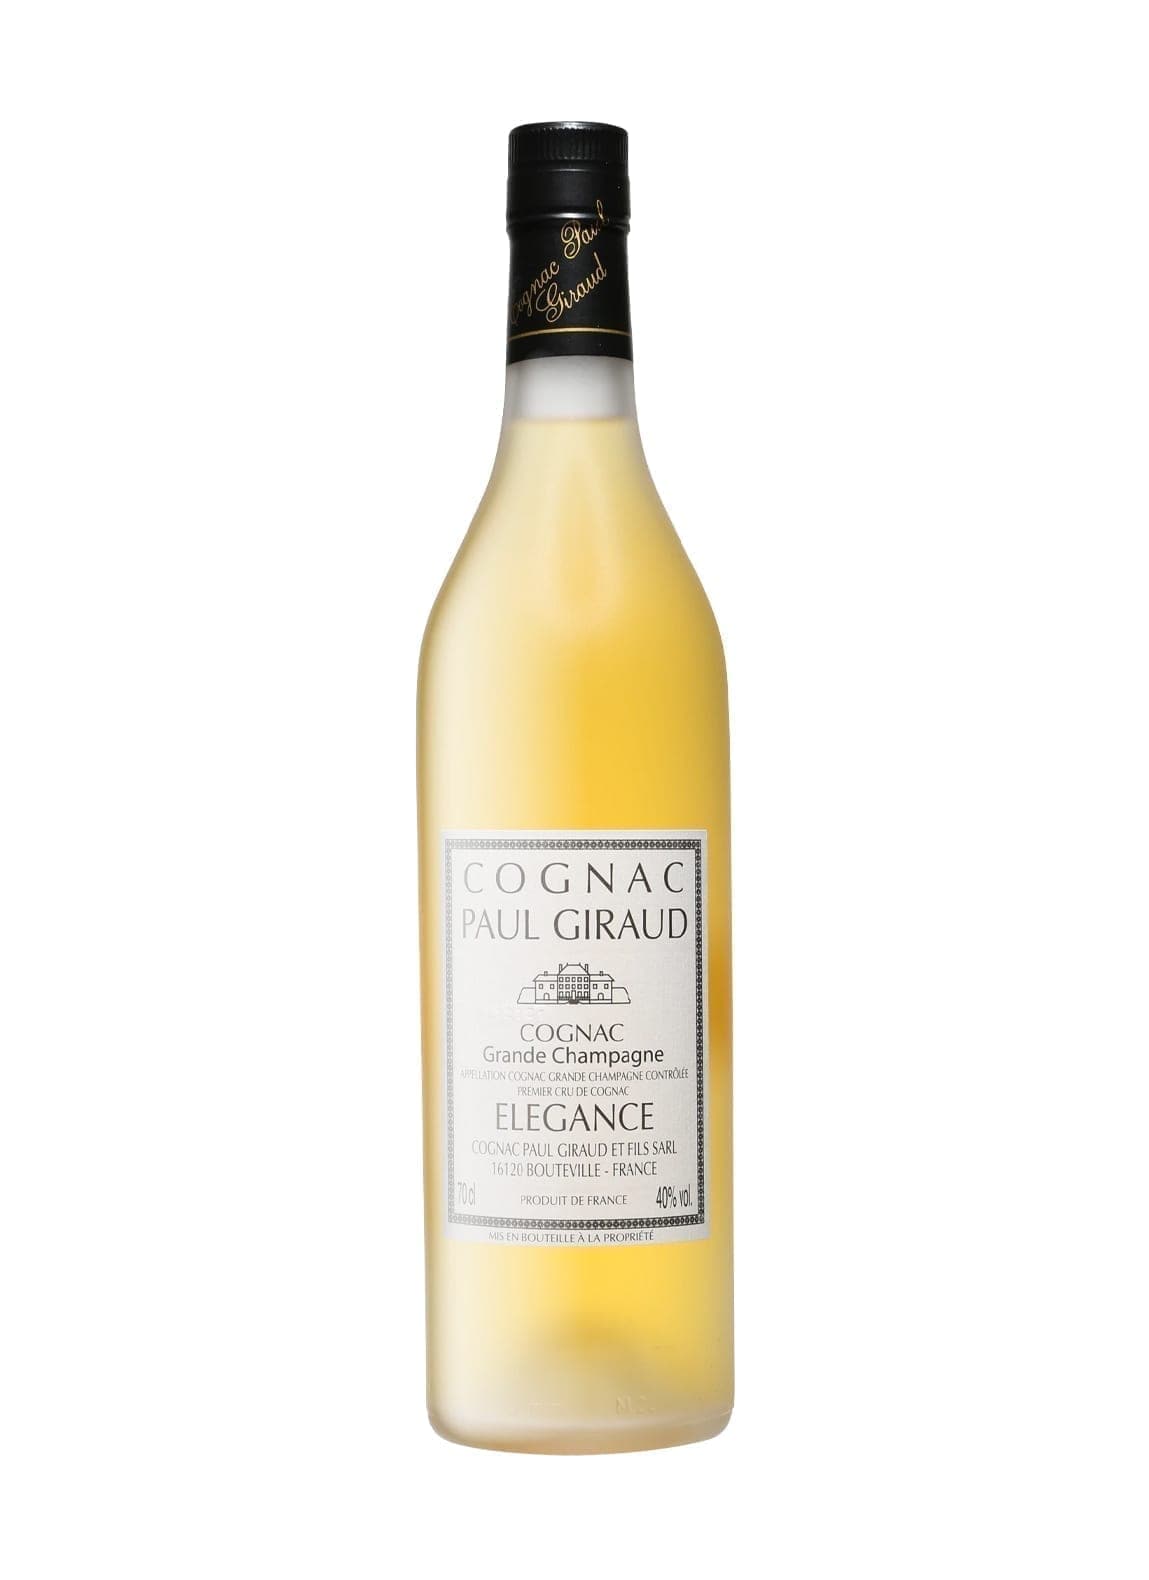 Paul Giraud Cognac 'Elegance' Grande Champagne (for cocktails) 40% 700ml | Alcoholic Beverages | Shop online at Spirits of France